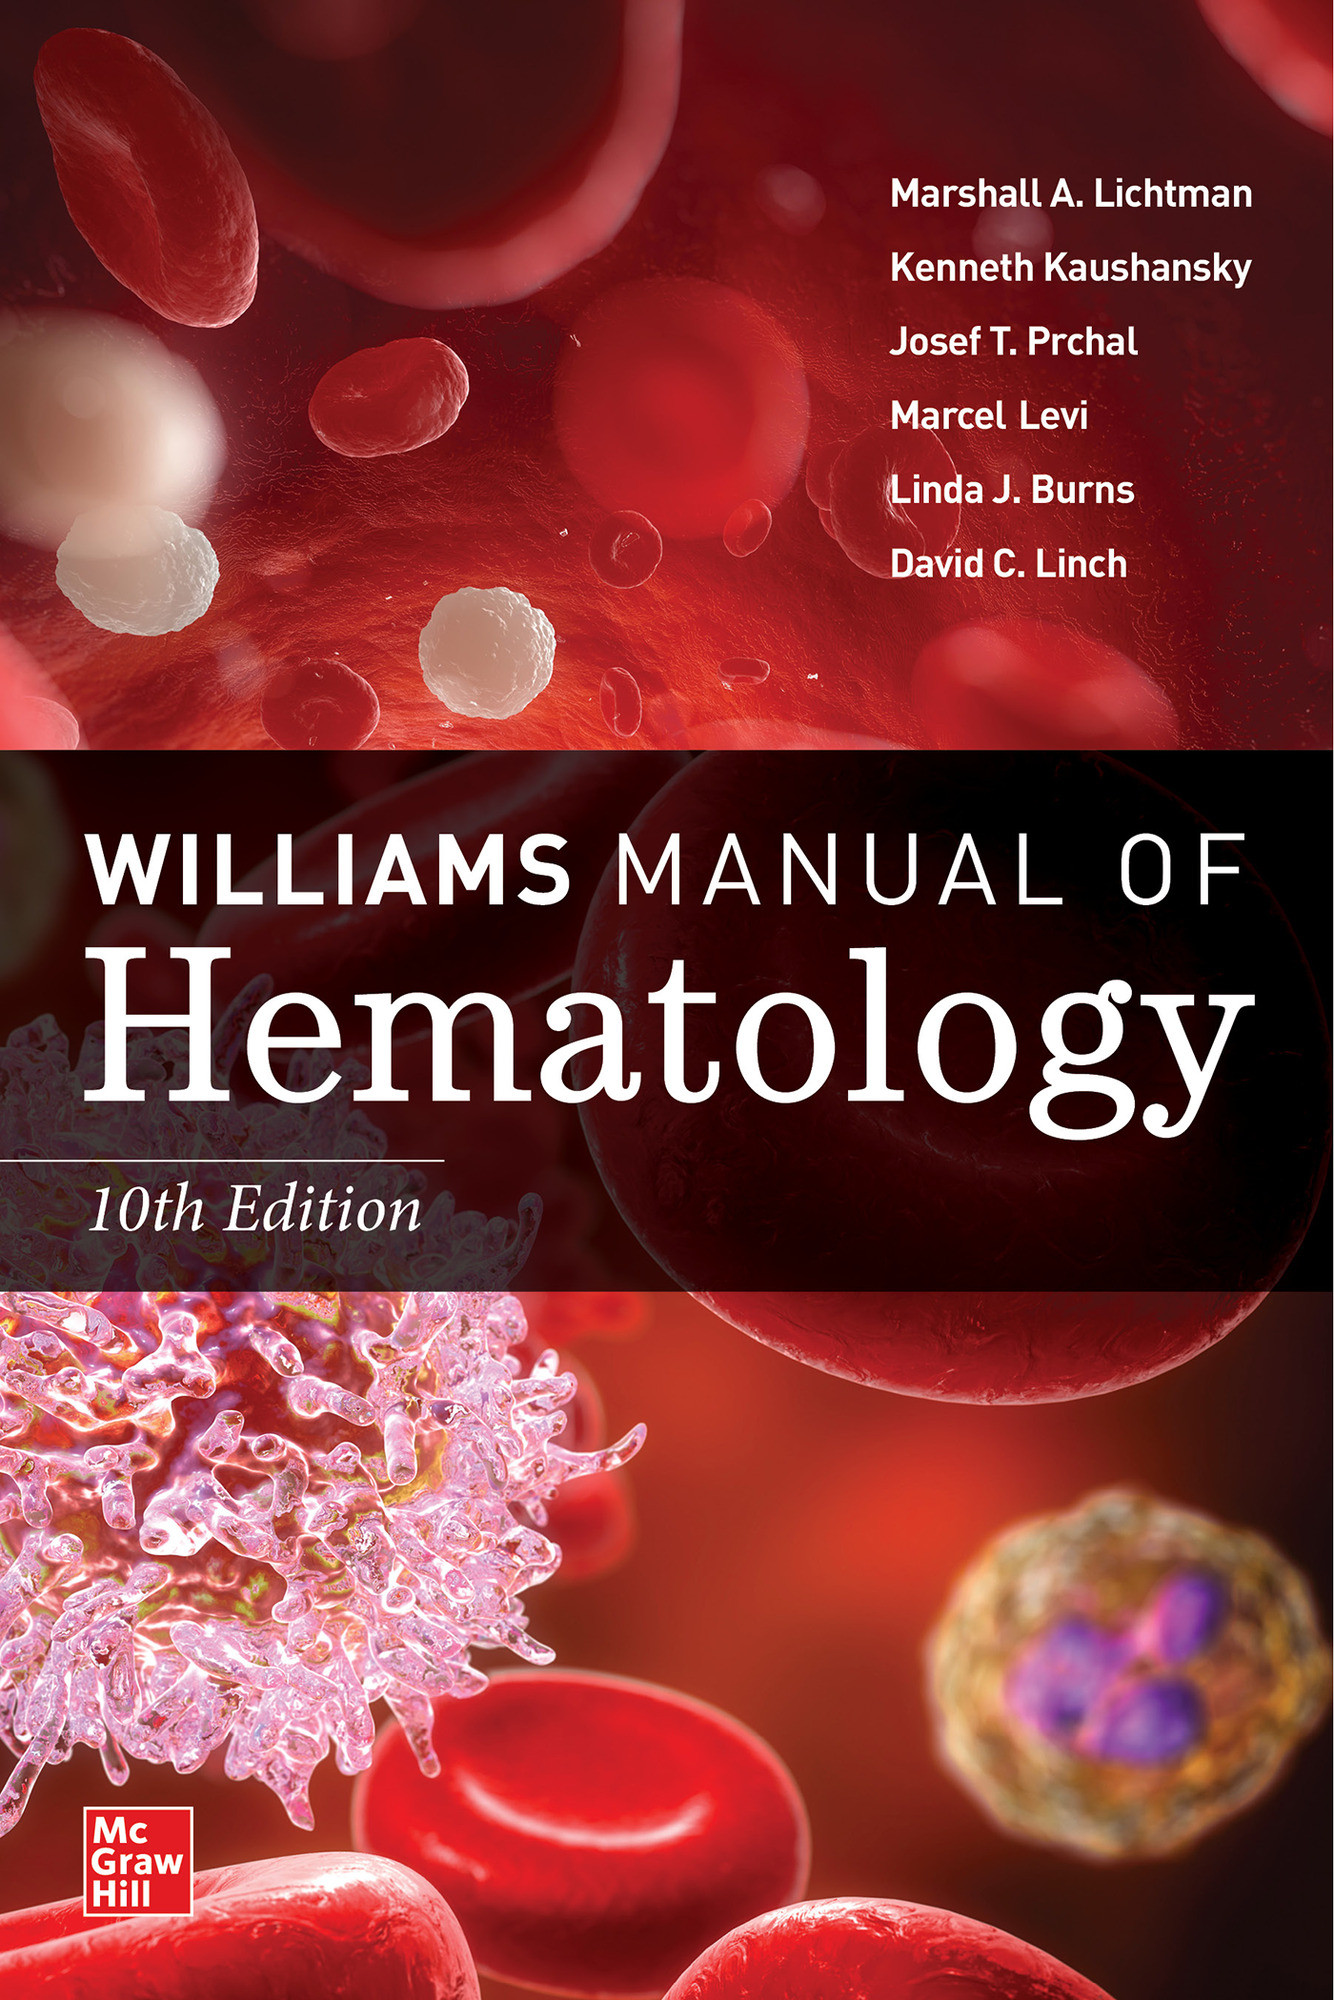 Williams Manual of Hematology, 10th ed.